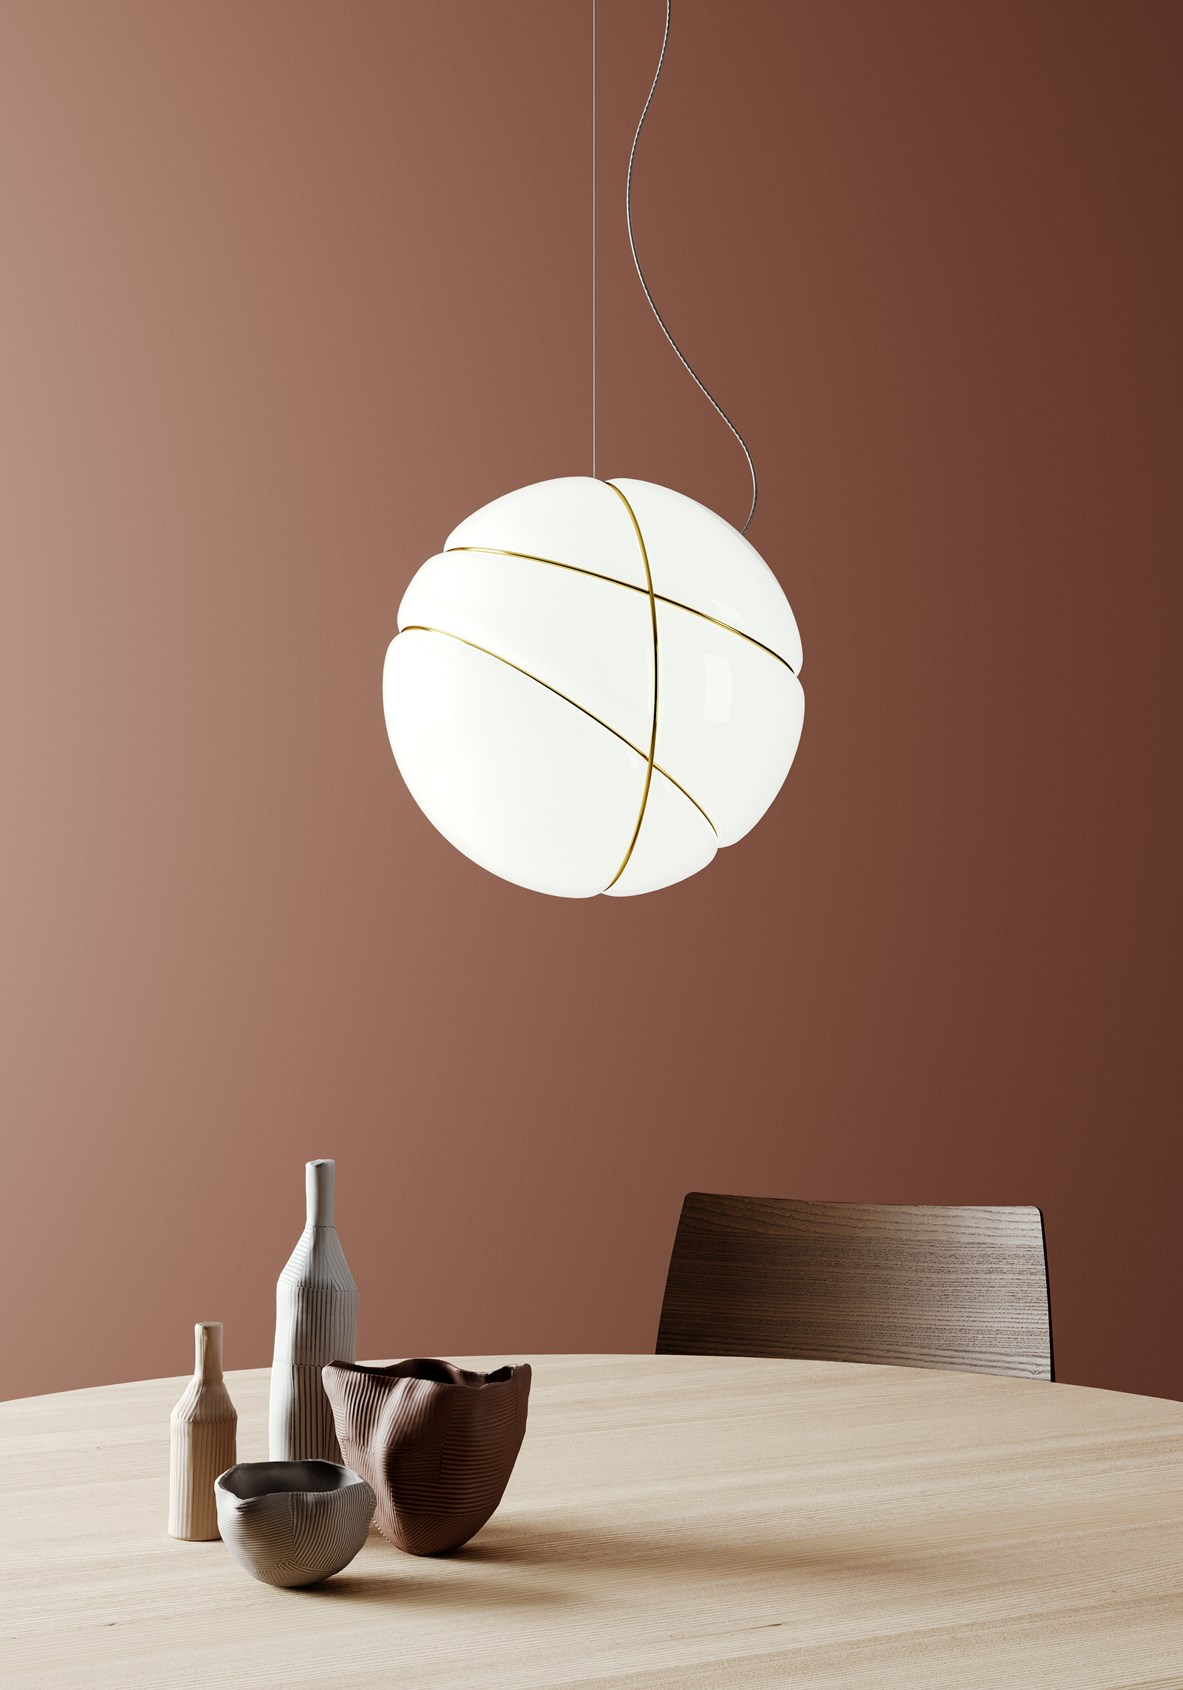 Contemporary Lamp "Armilla" designed by Lorenzo Truant for Fabbian